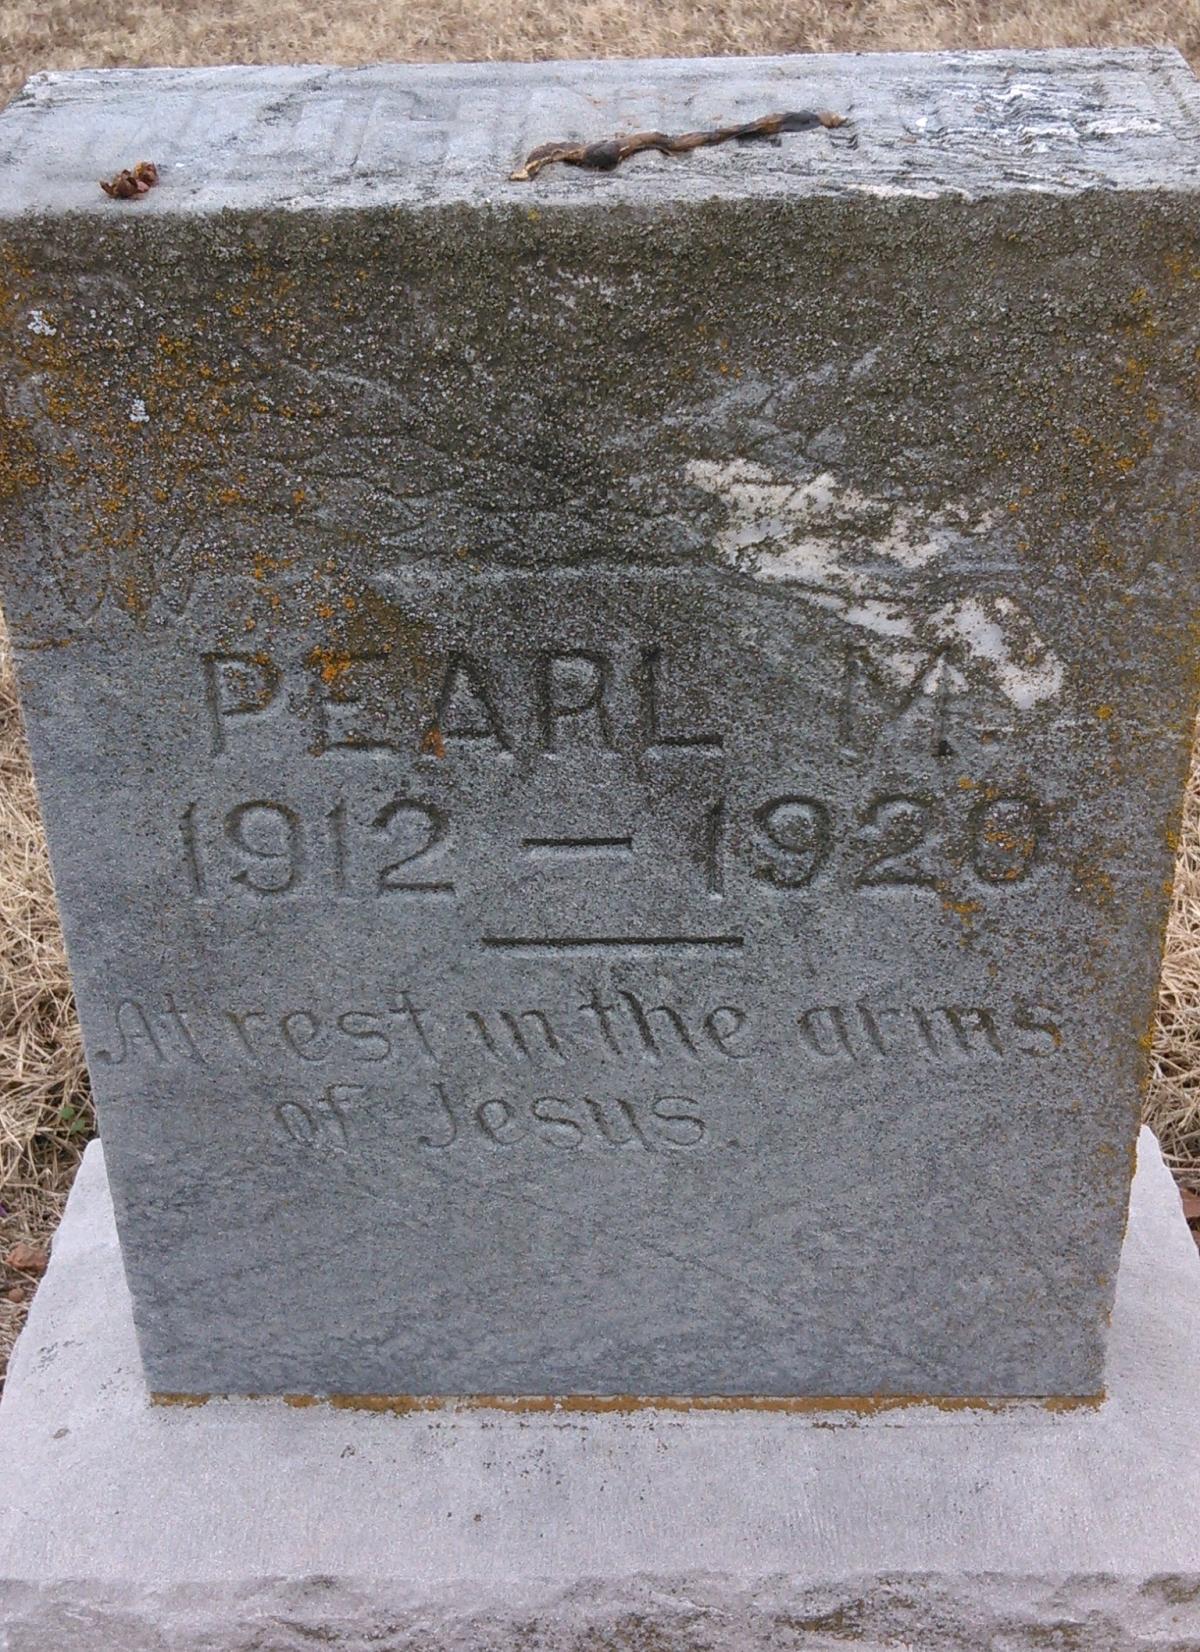 OK, Grove, Olympus Cemetery, Johnson, Pearl M. Headstone